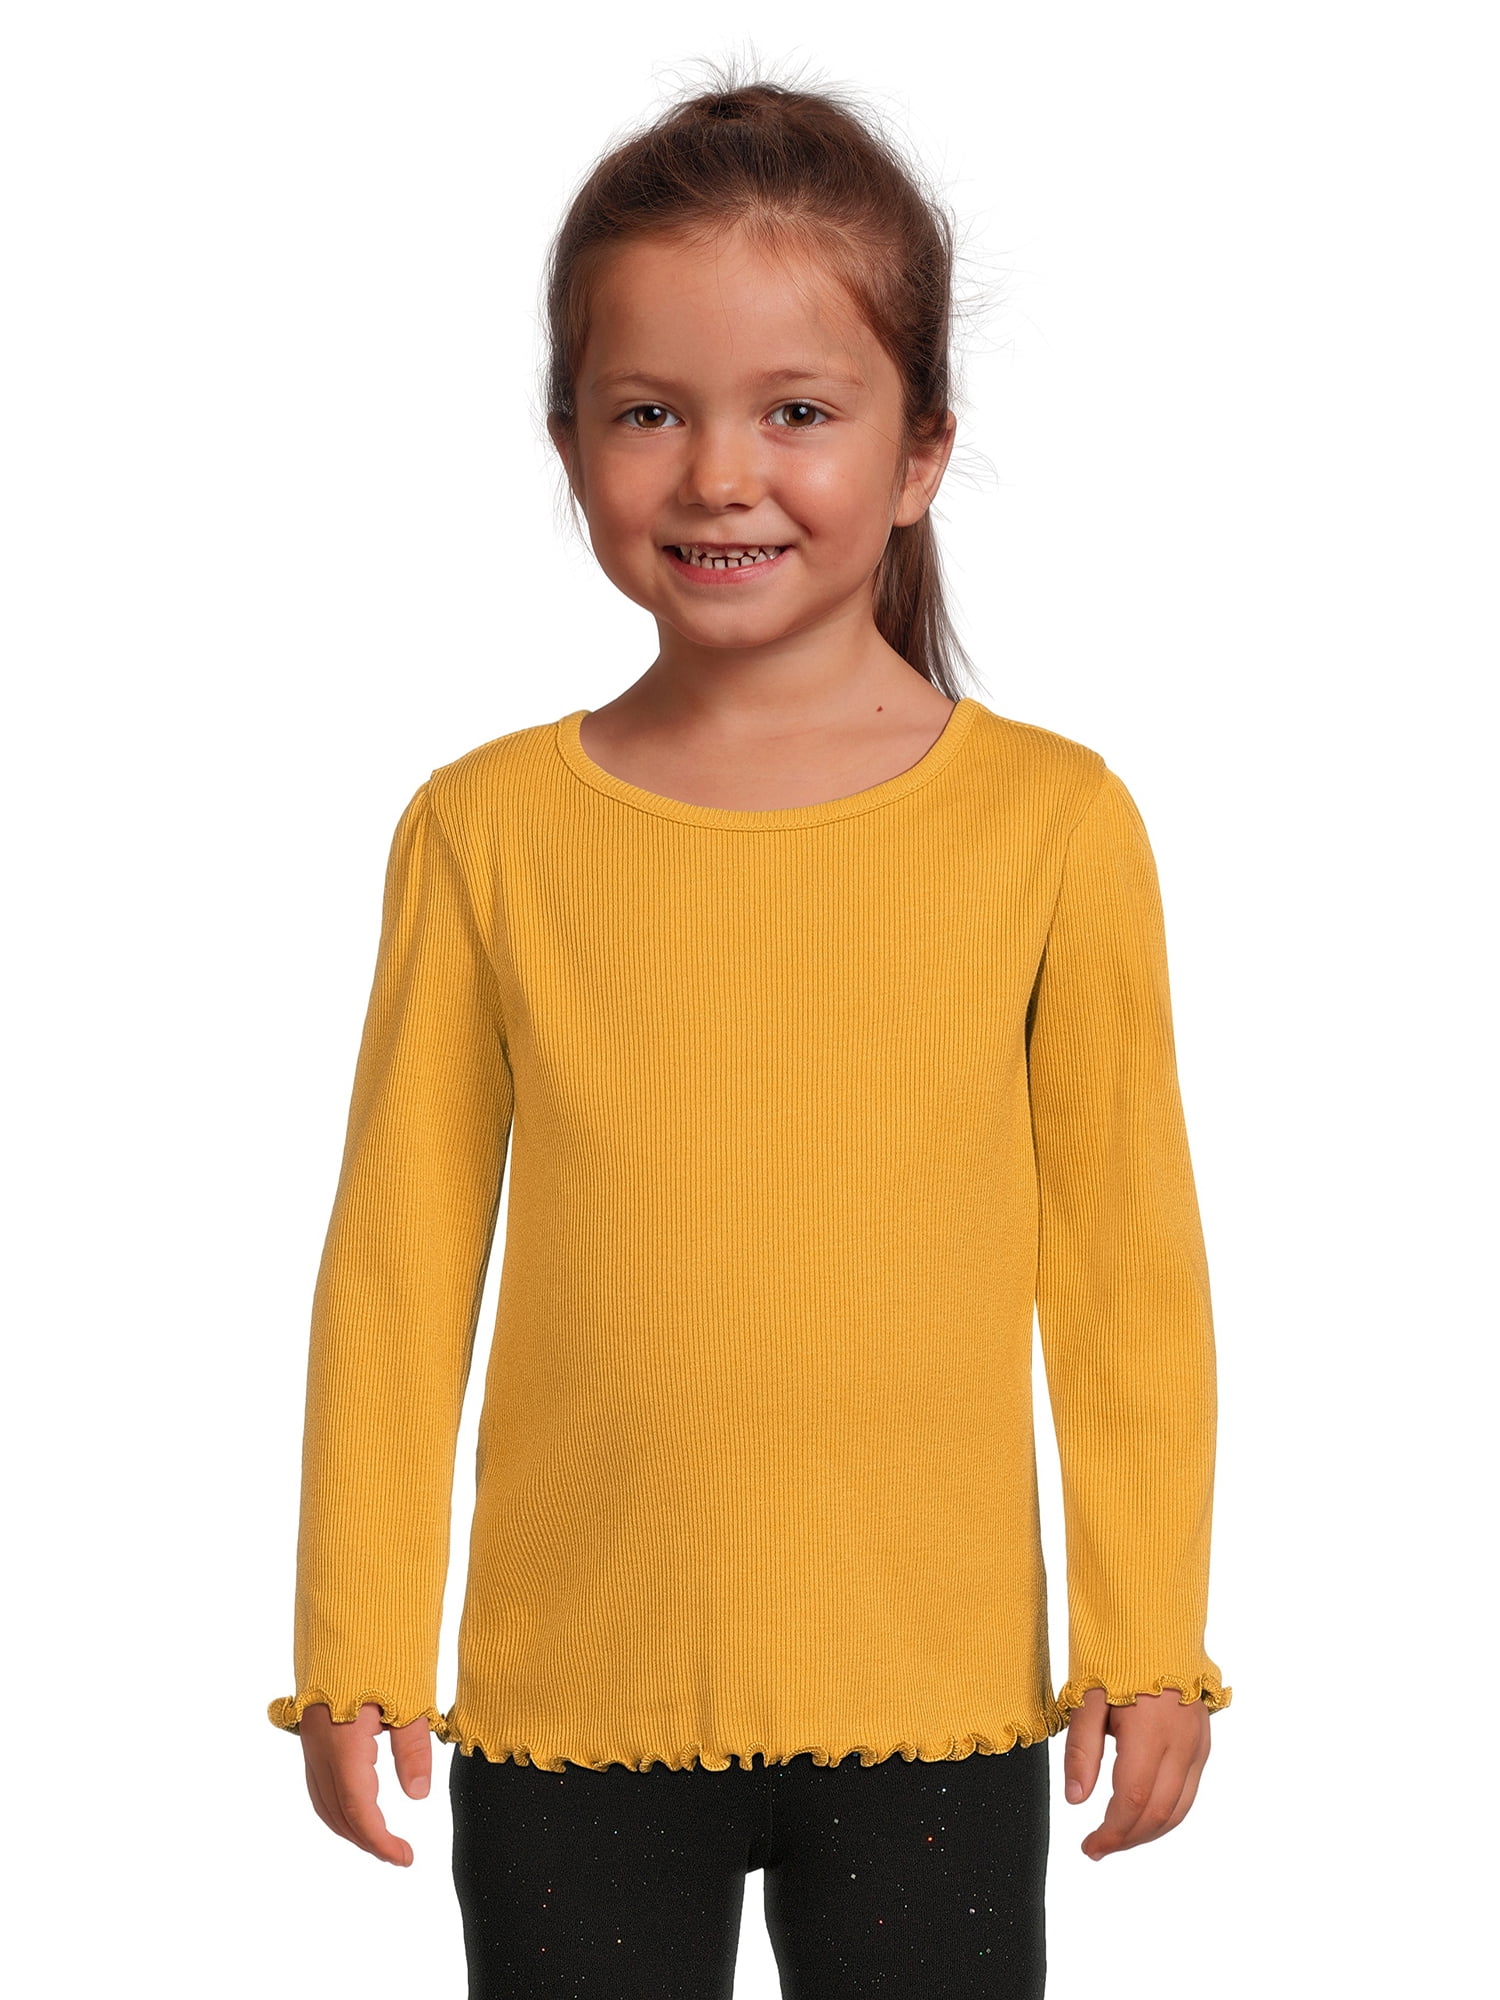 Garanimals Toddler Girl Ribbed Long Sleeve Top, Sizes 12M-5T | V-Shirts